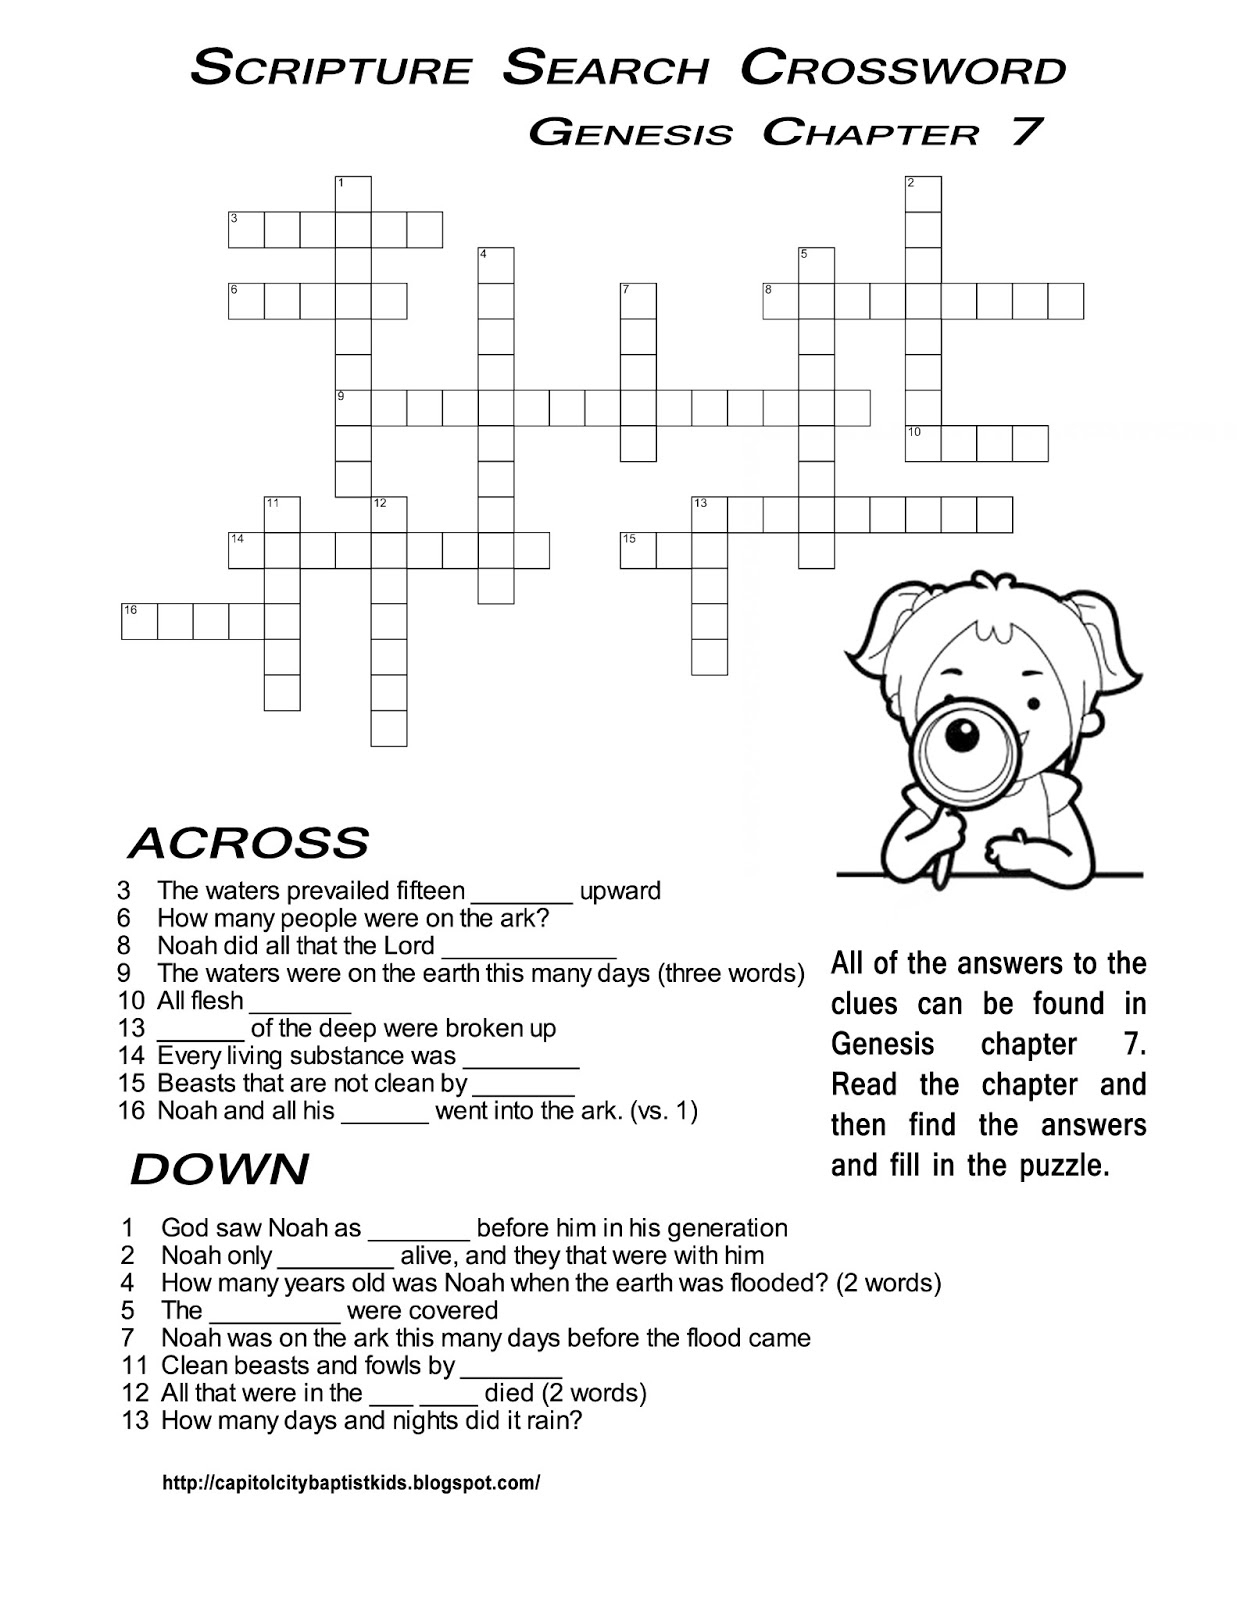 Ccbc Kids Corner: Scripture Search Crossword #2 - Printable Crossword #2